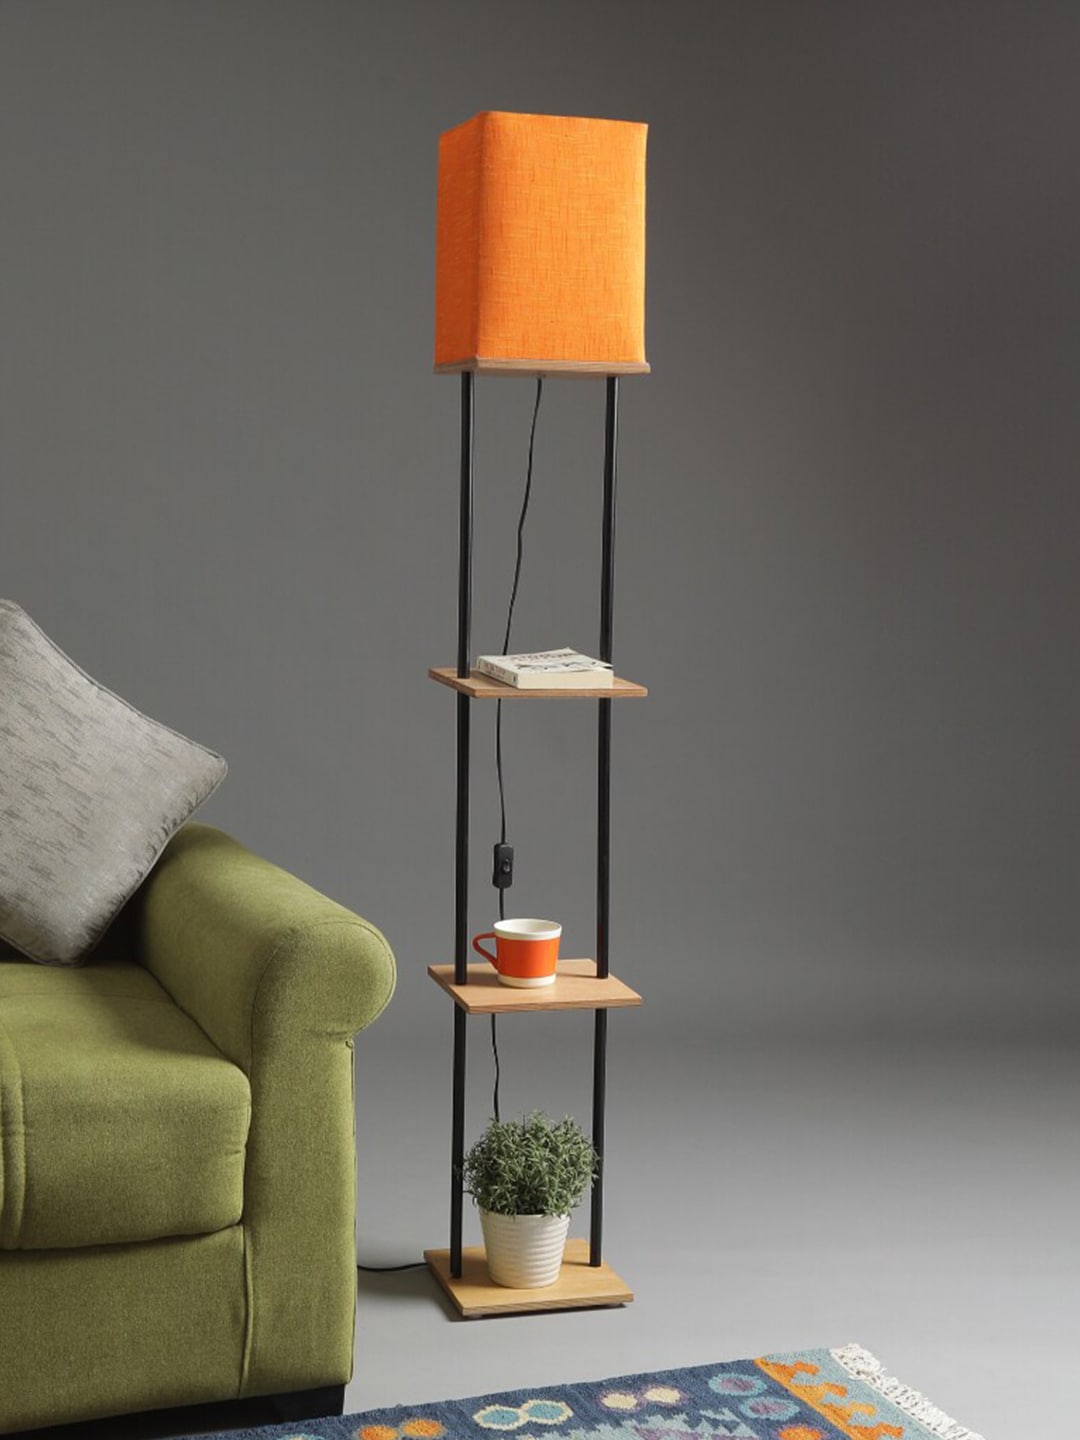 SANDED EDGE Orange & Black Contemporary Shelf Lamp with Shade Price in India